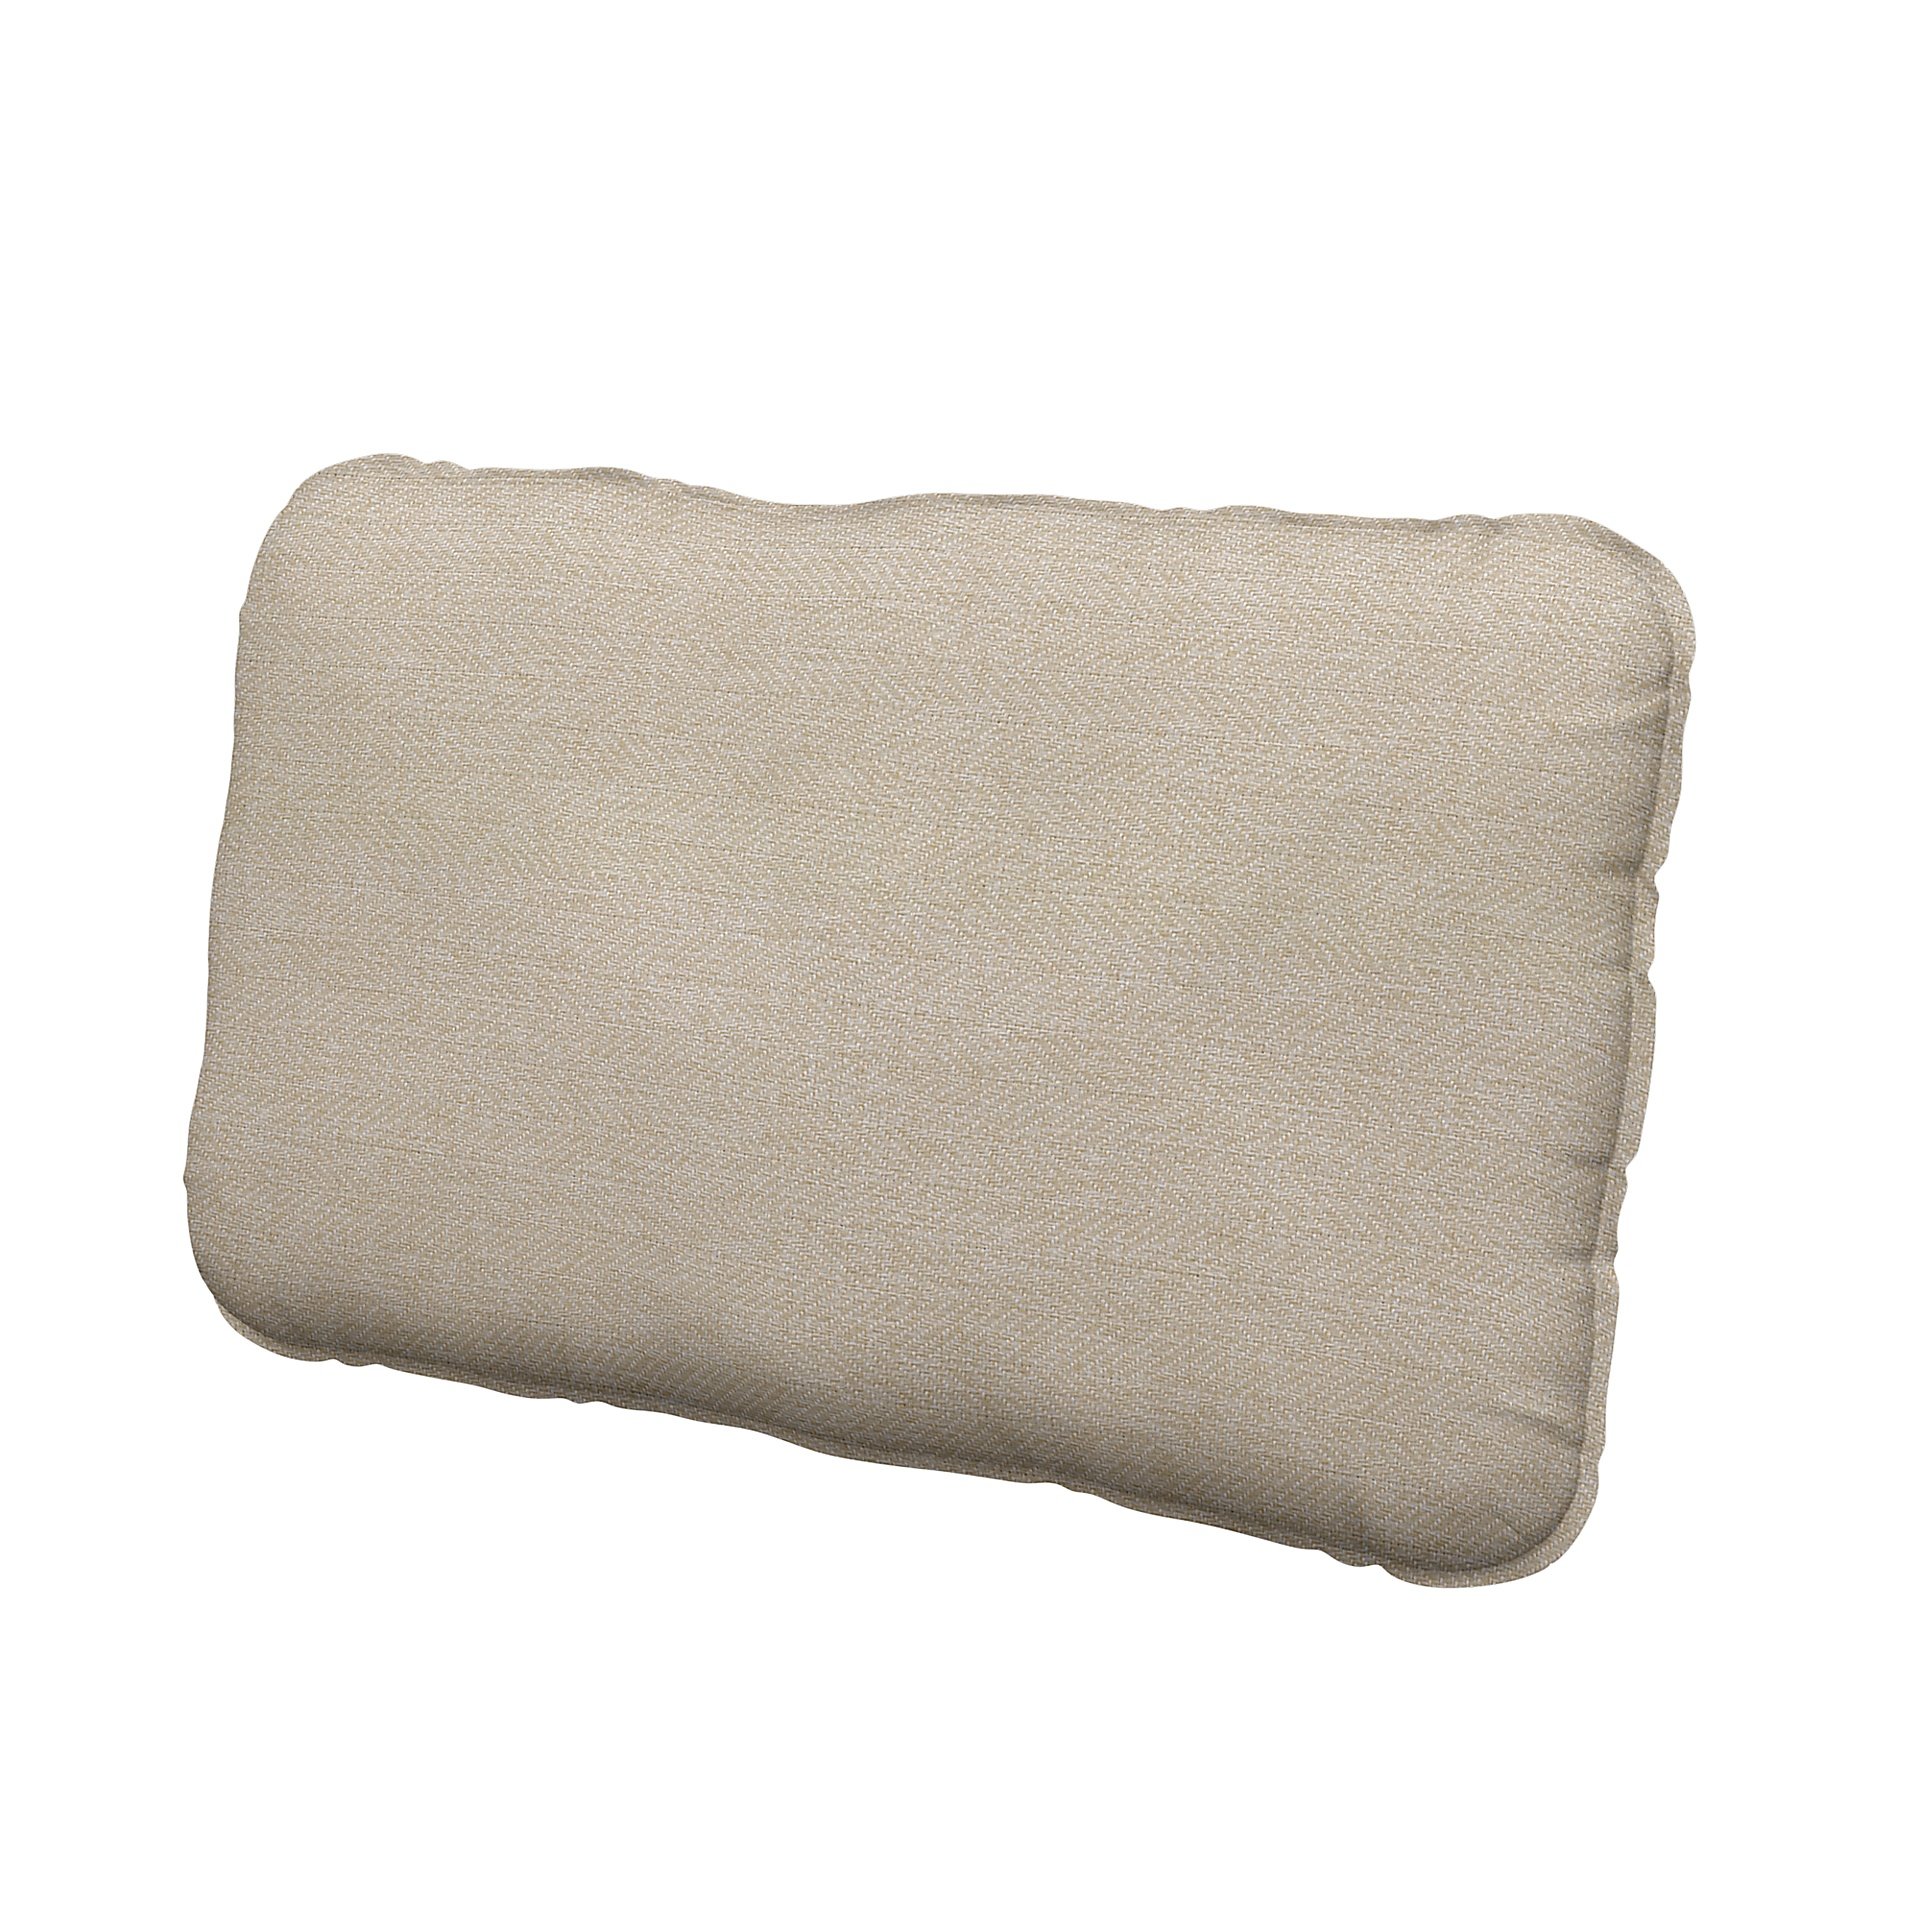 IKEA - Vallentuna back cushion cover 40x75cm, Natural, Boucle & Texture - Bemz